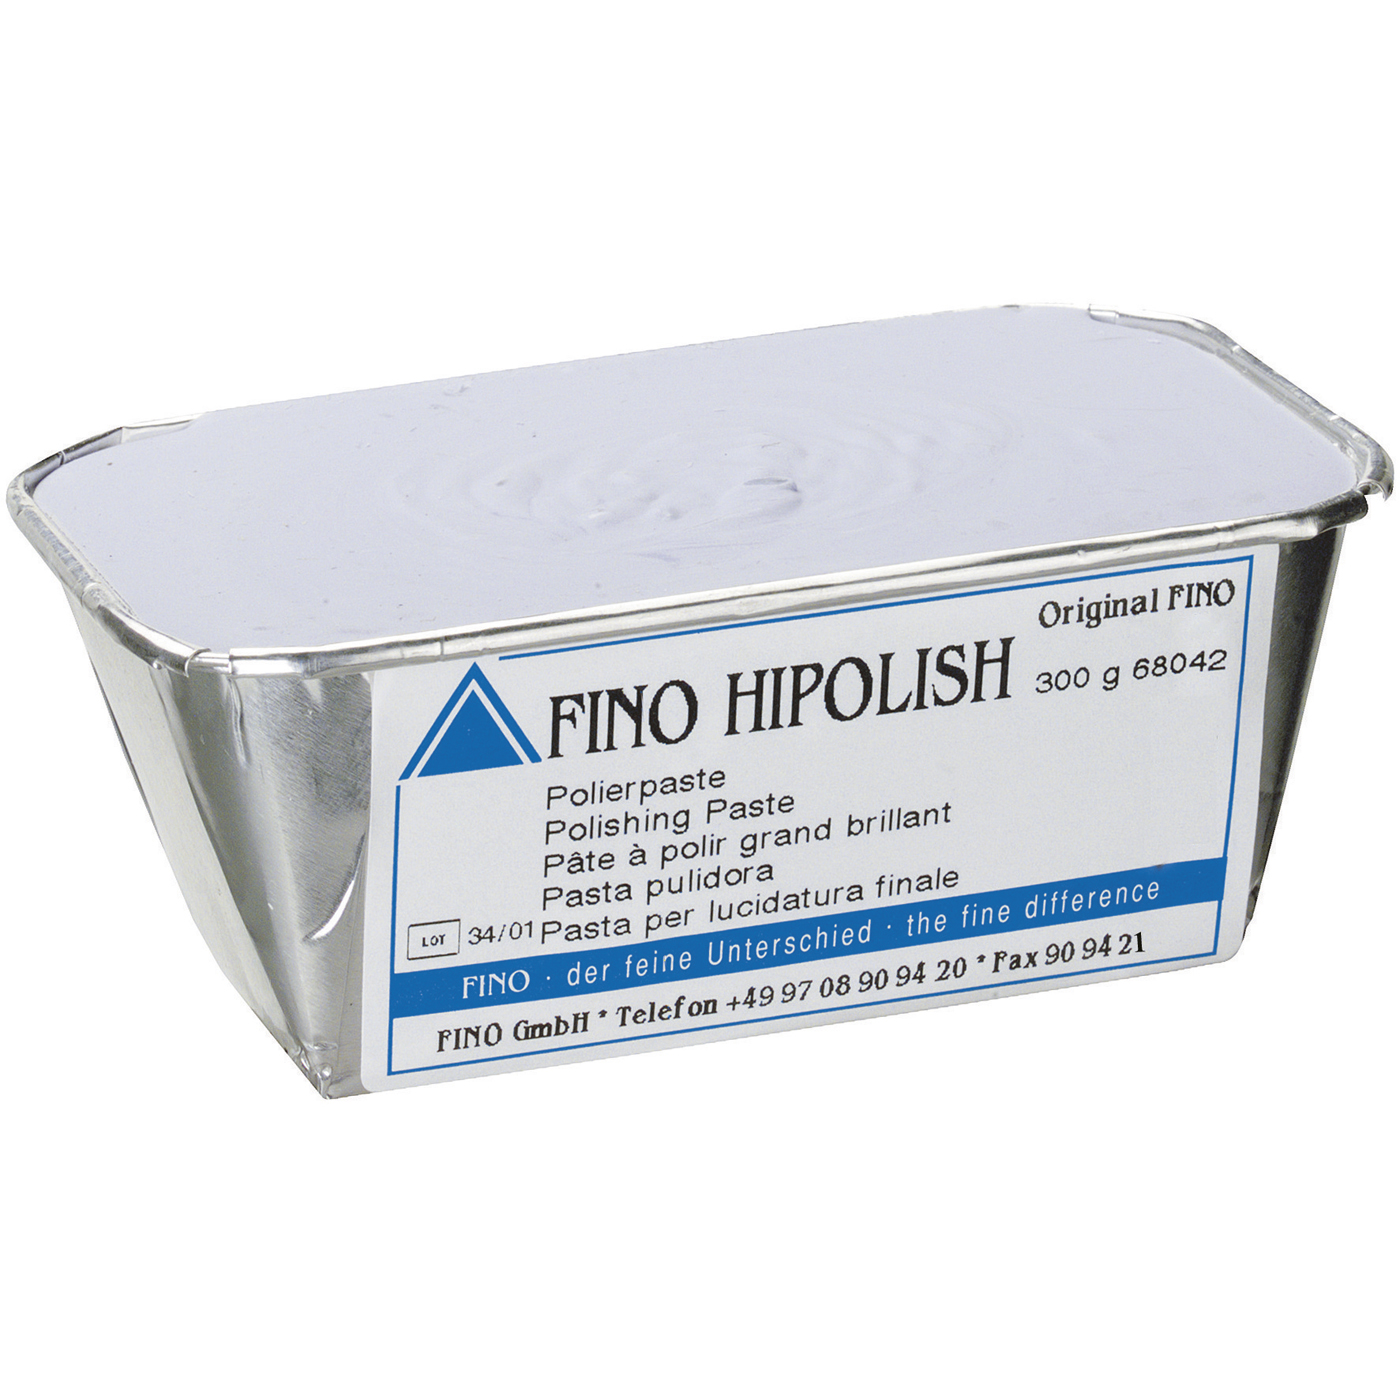 FINO HIPOLISH Polishing Paste, Light Blue - 300 g